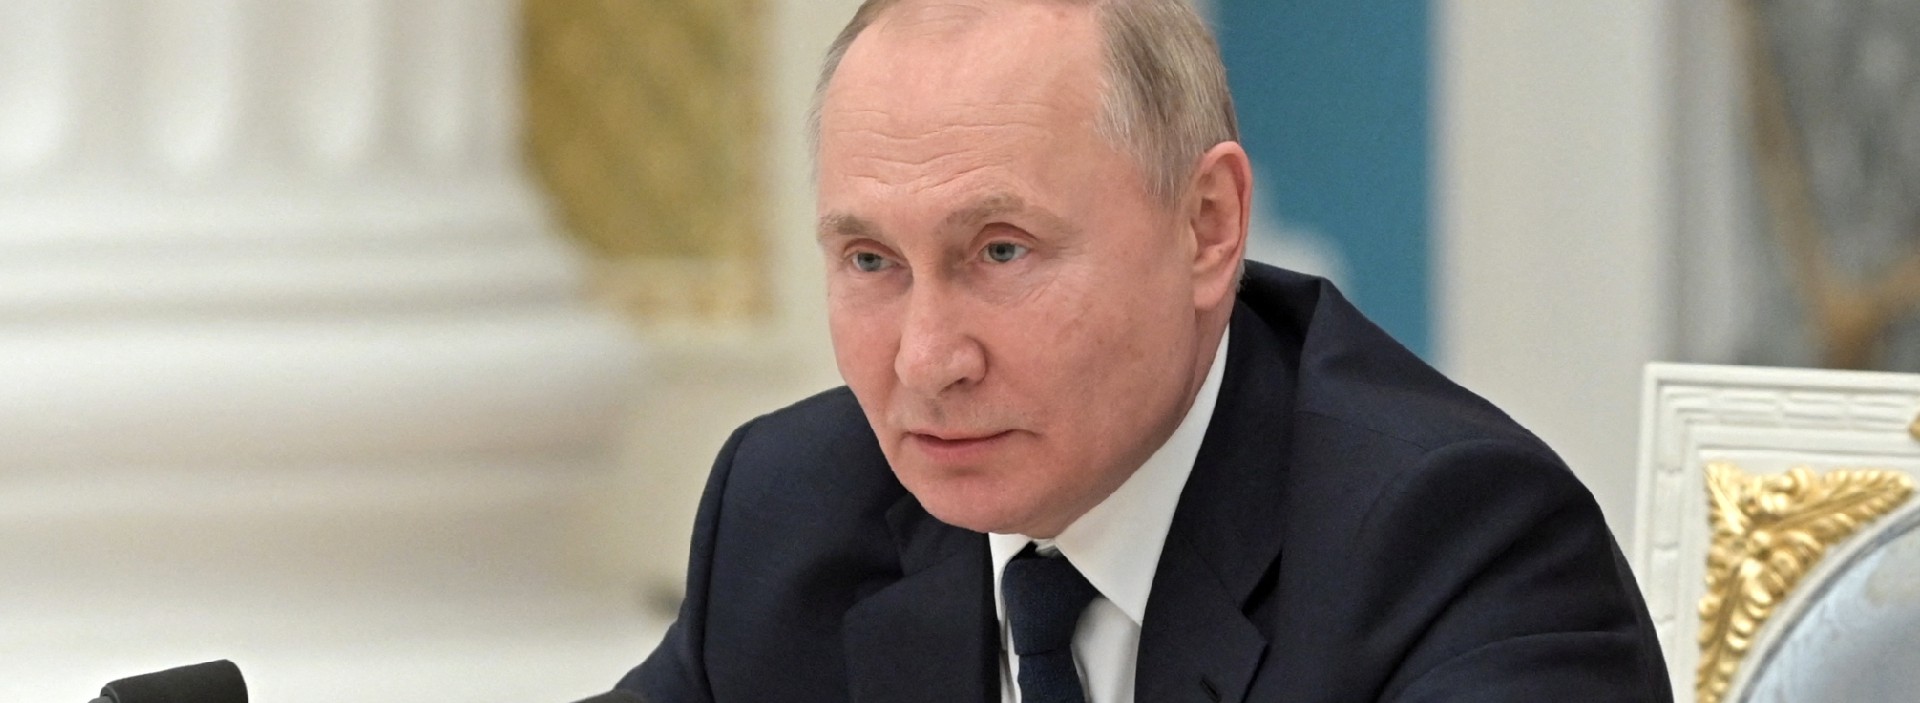 Presidente russo Vladimir Putin (Foto: ALEXEY NIKOLSKY / SPUTNIK / AFP)